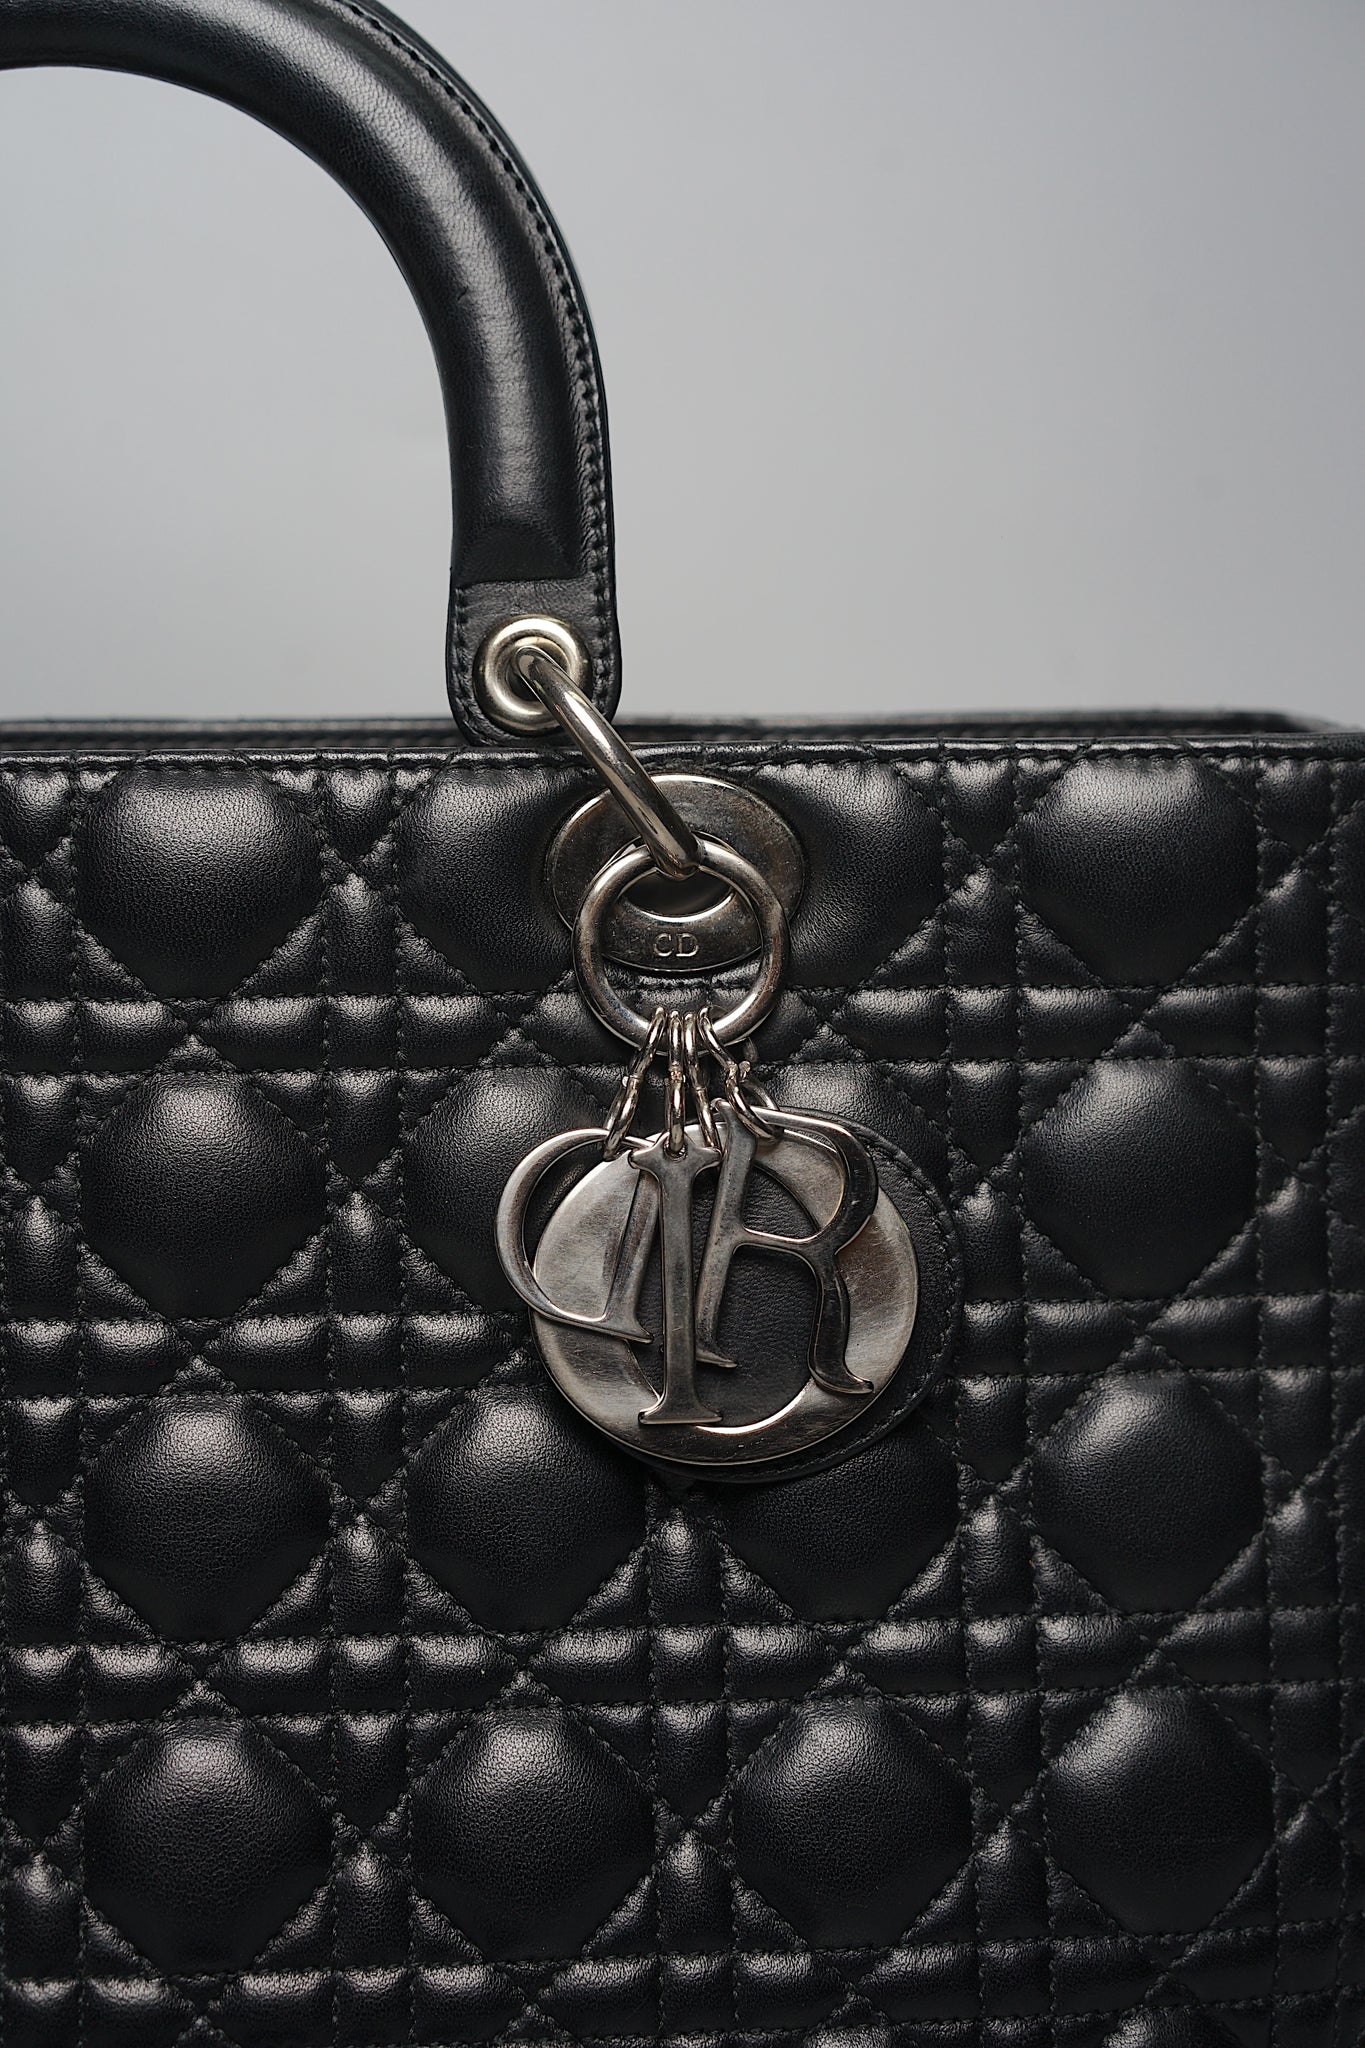 Large Lady Dior Bag in Black Shw